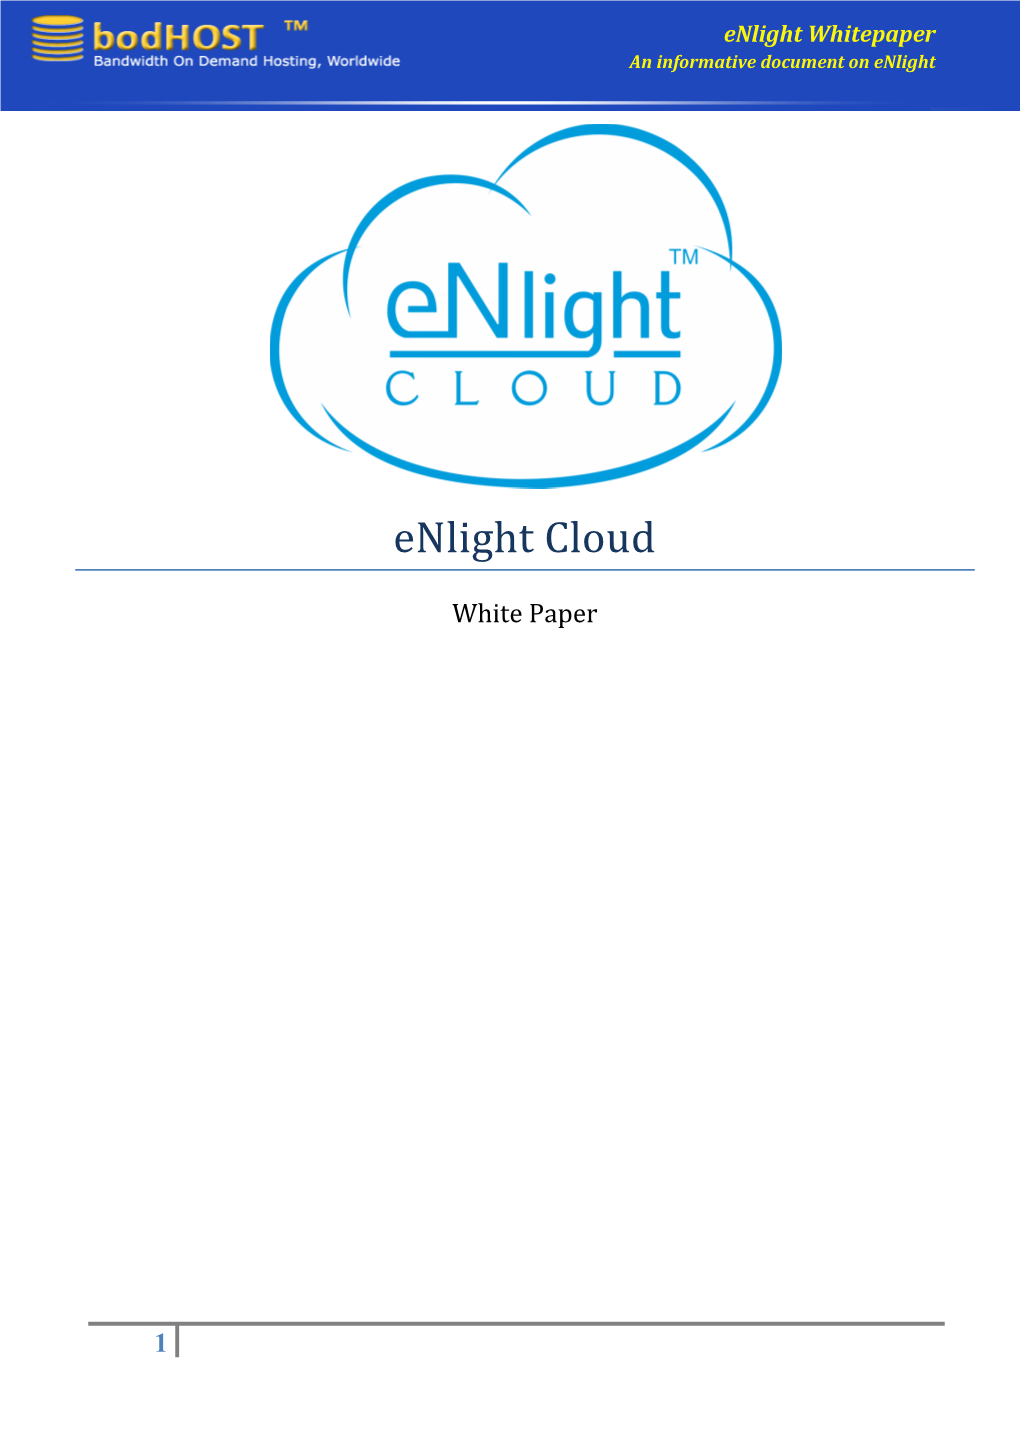 Enlight Cloud